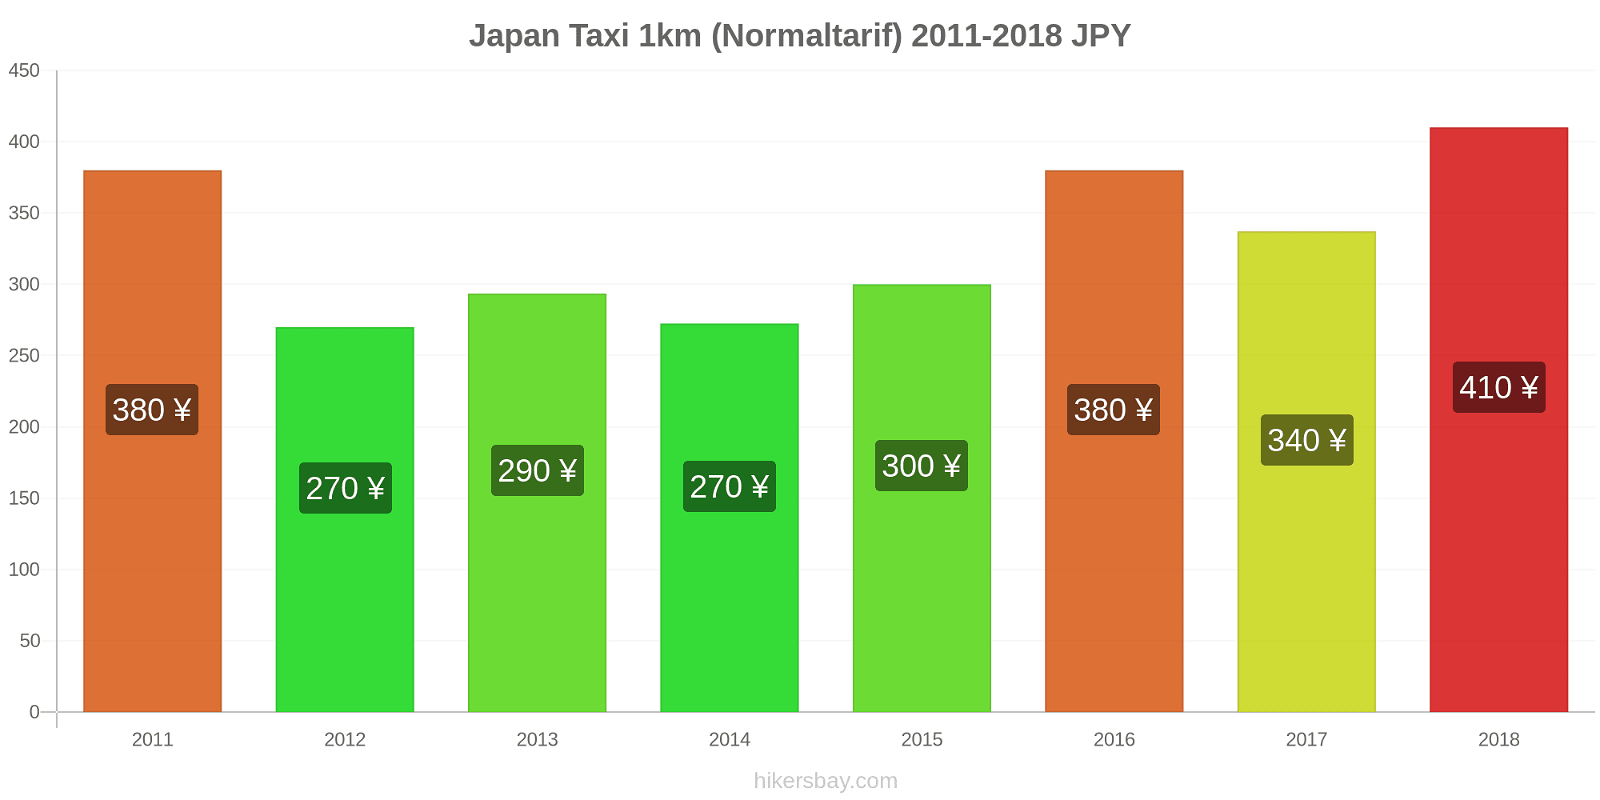 Japan Preisänderungen Taxi 1km (Normaltarif) hikersbay.com